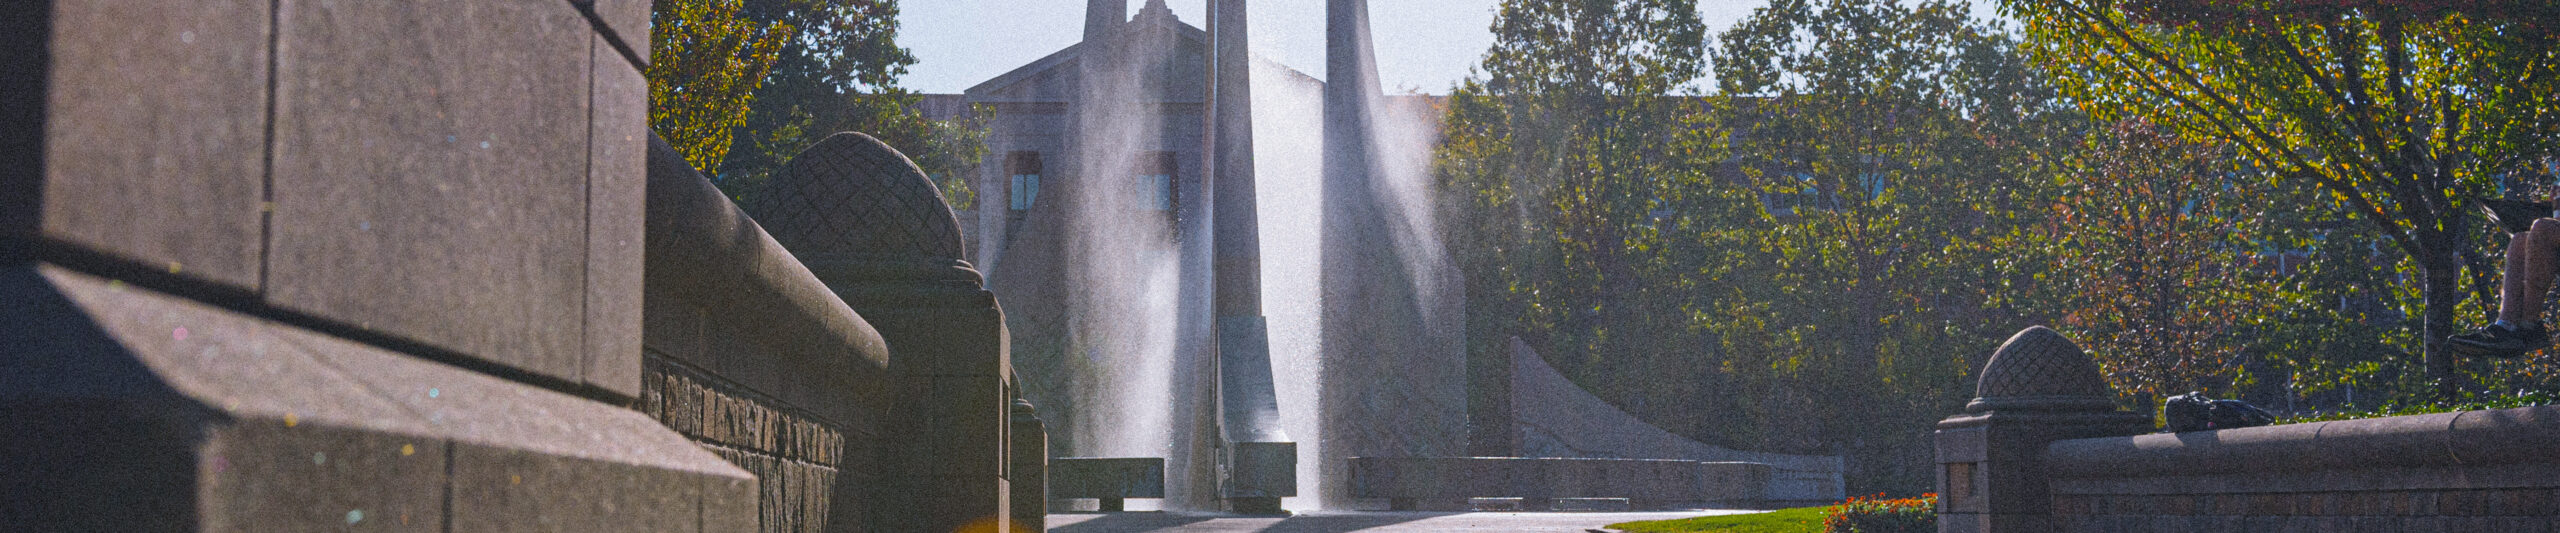 Purdue Engineering Fountain